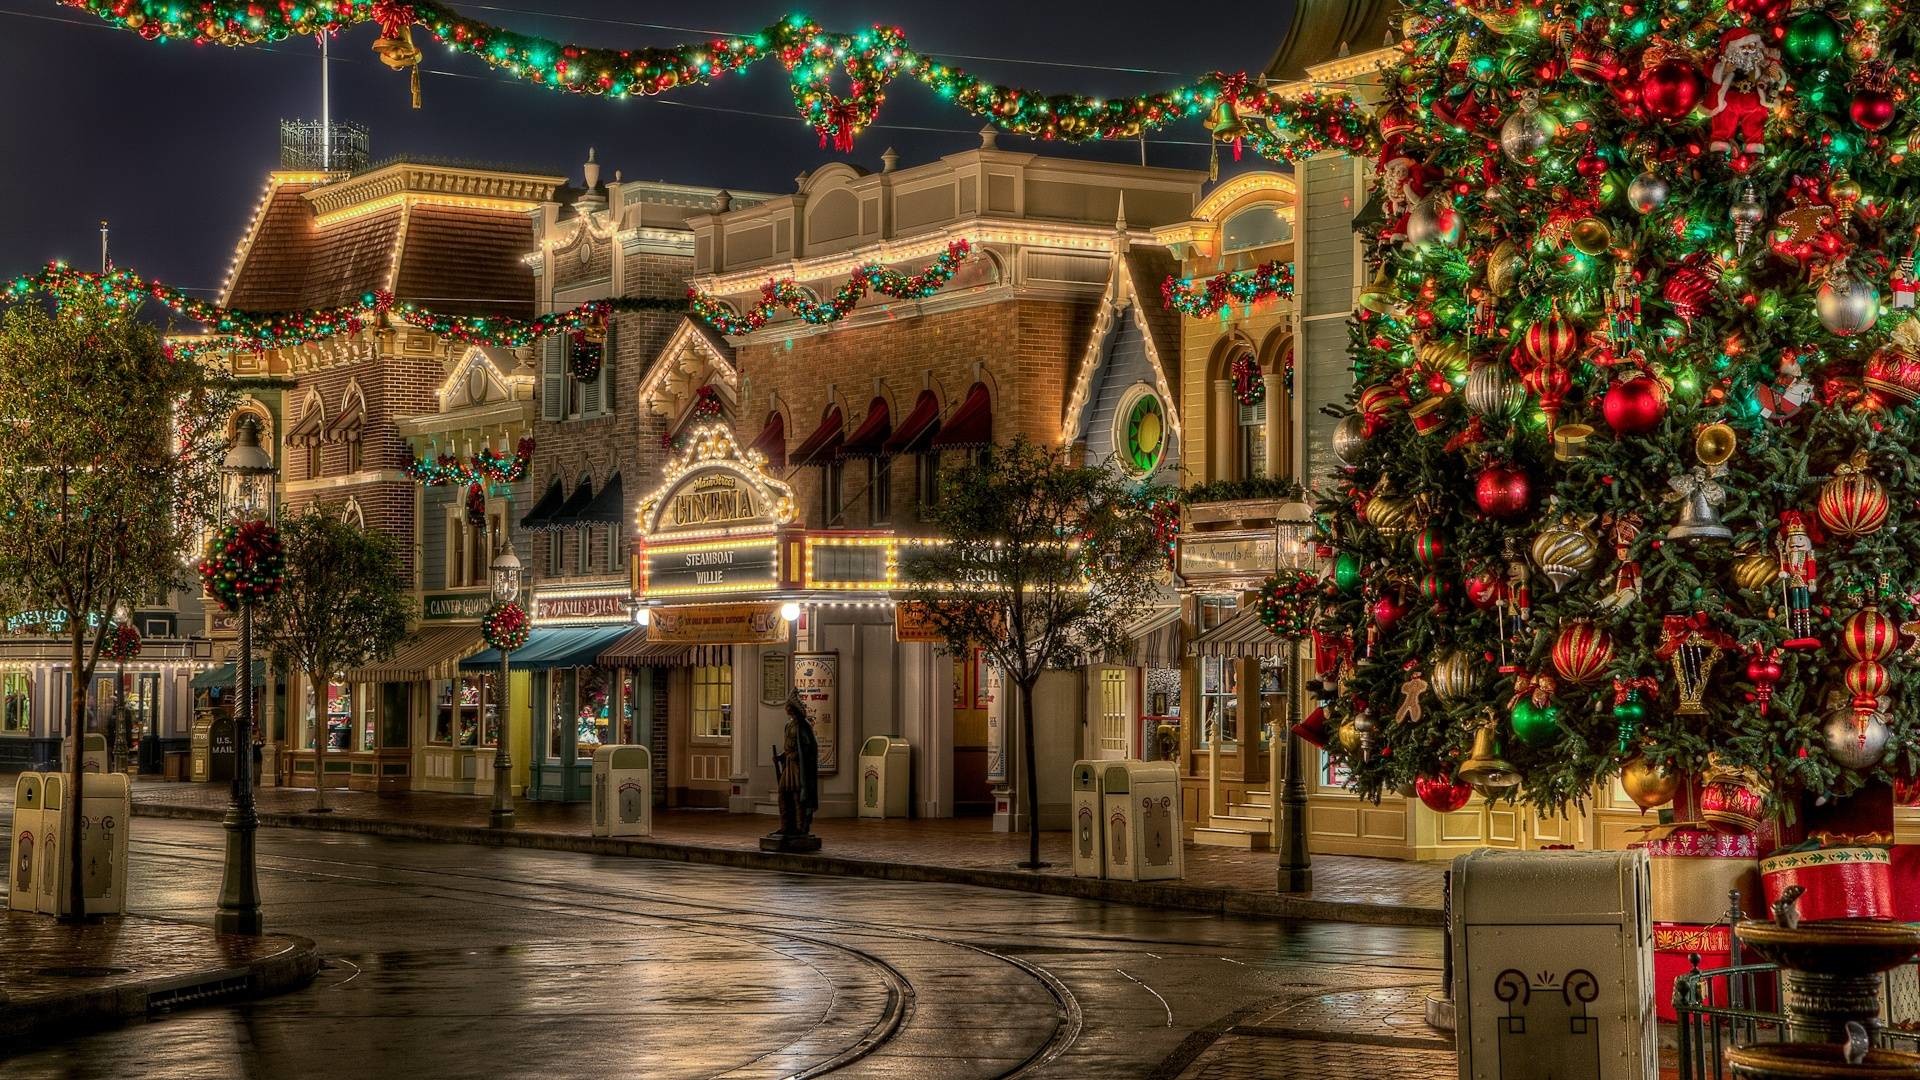 Christmas Tree Desktop Background Image